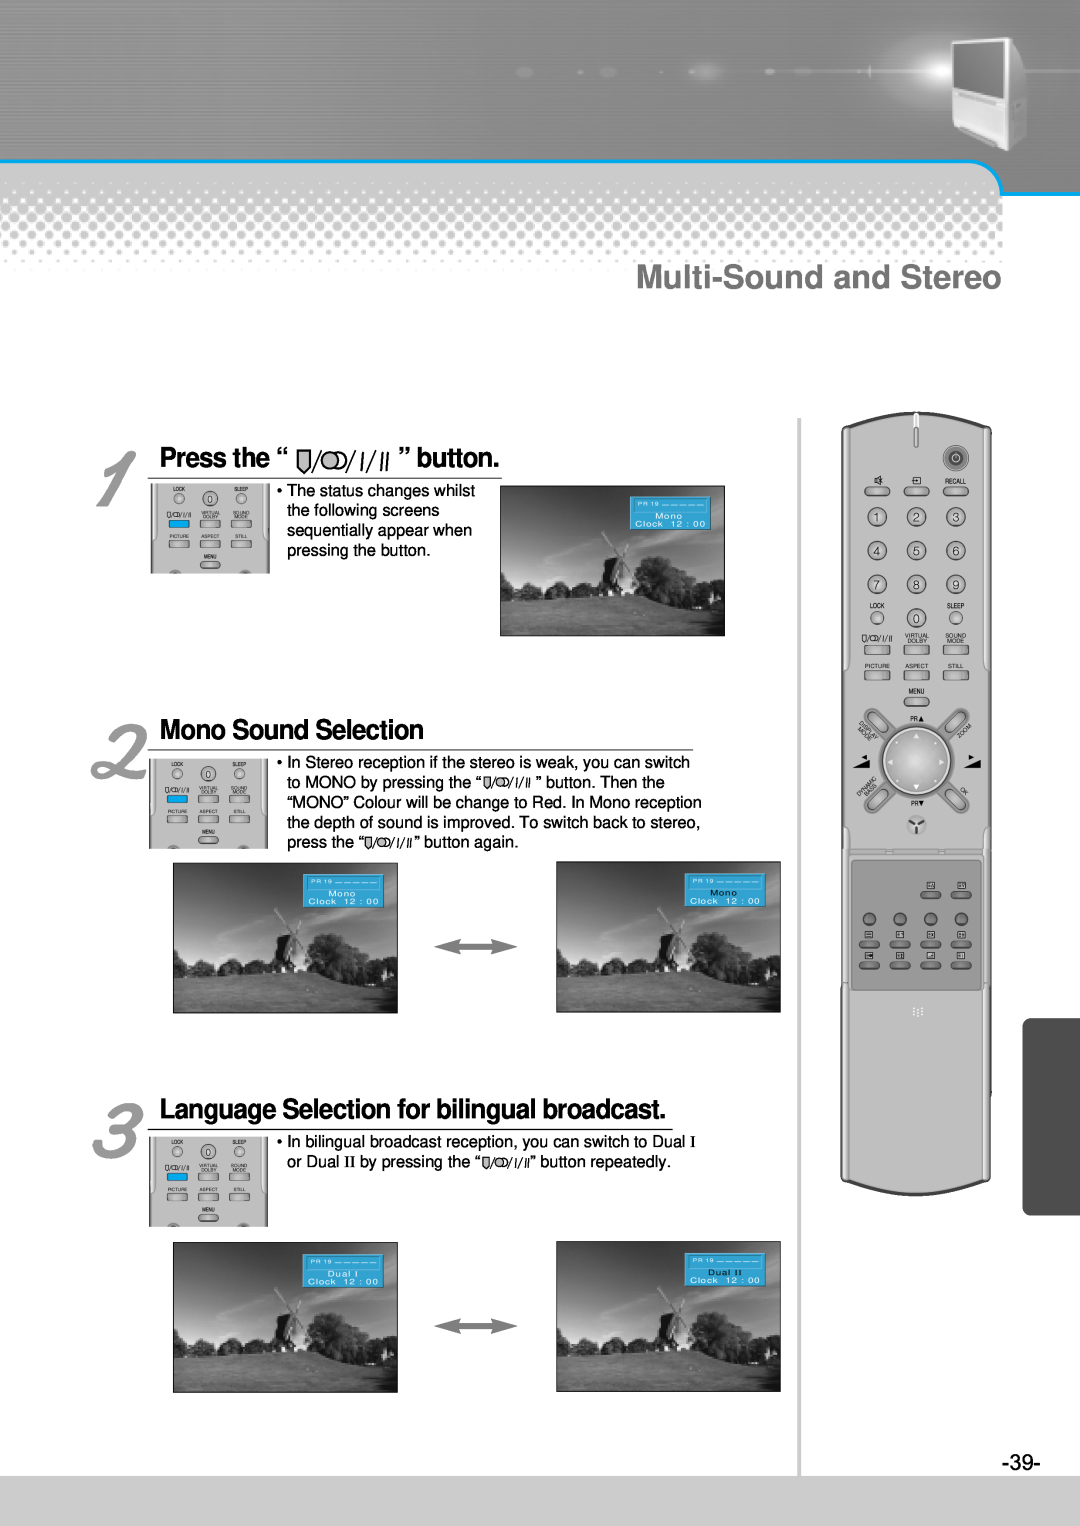 Daewoo DJ-4710, DJ-4720, DJ-4710E, DJ-4720E Multi-Sound and Stereo, Press the “ ” button, Mono Sound Selection 